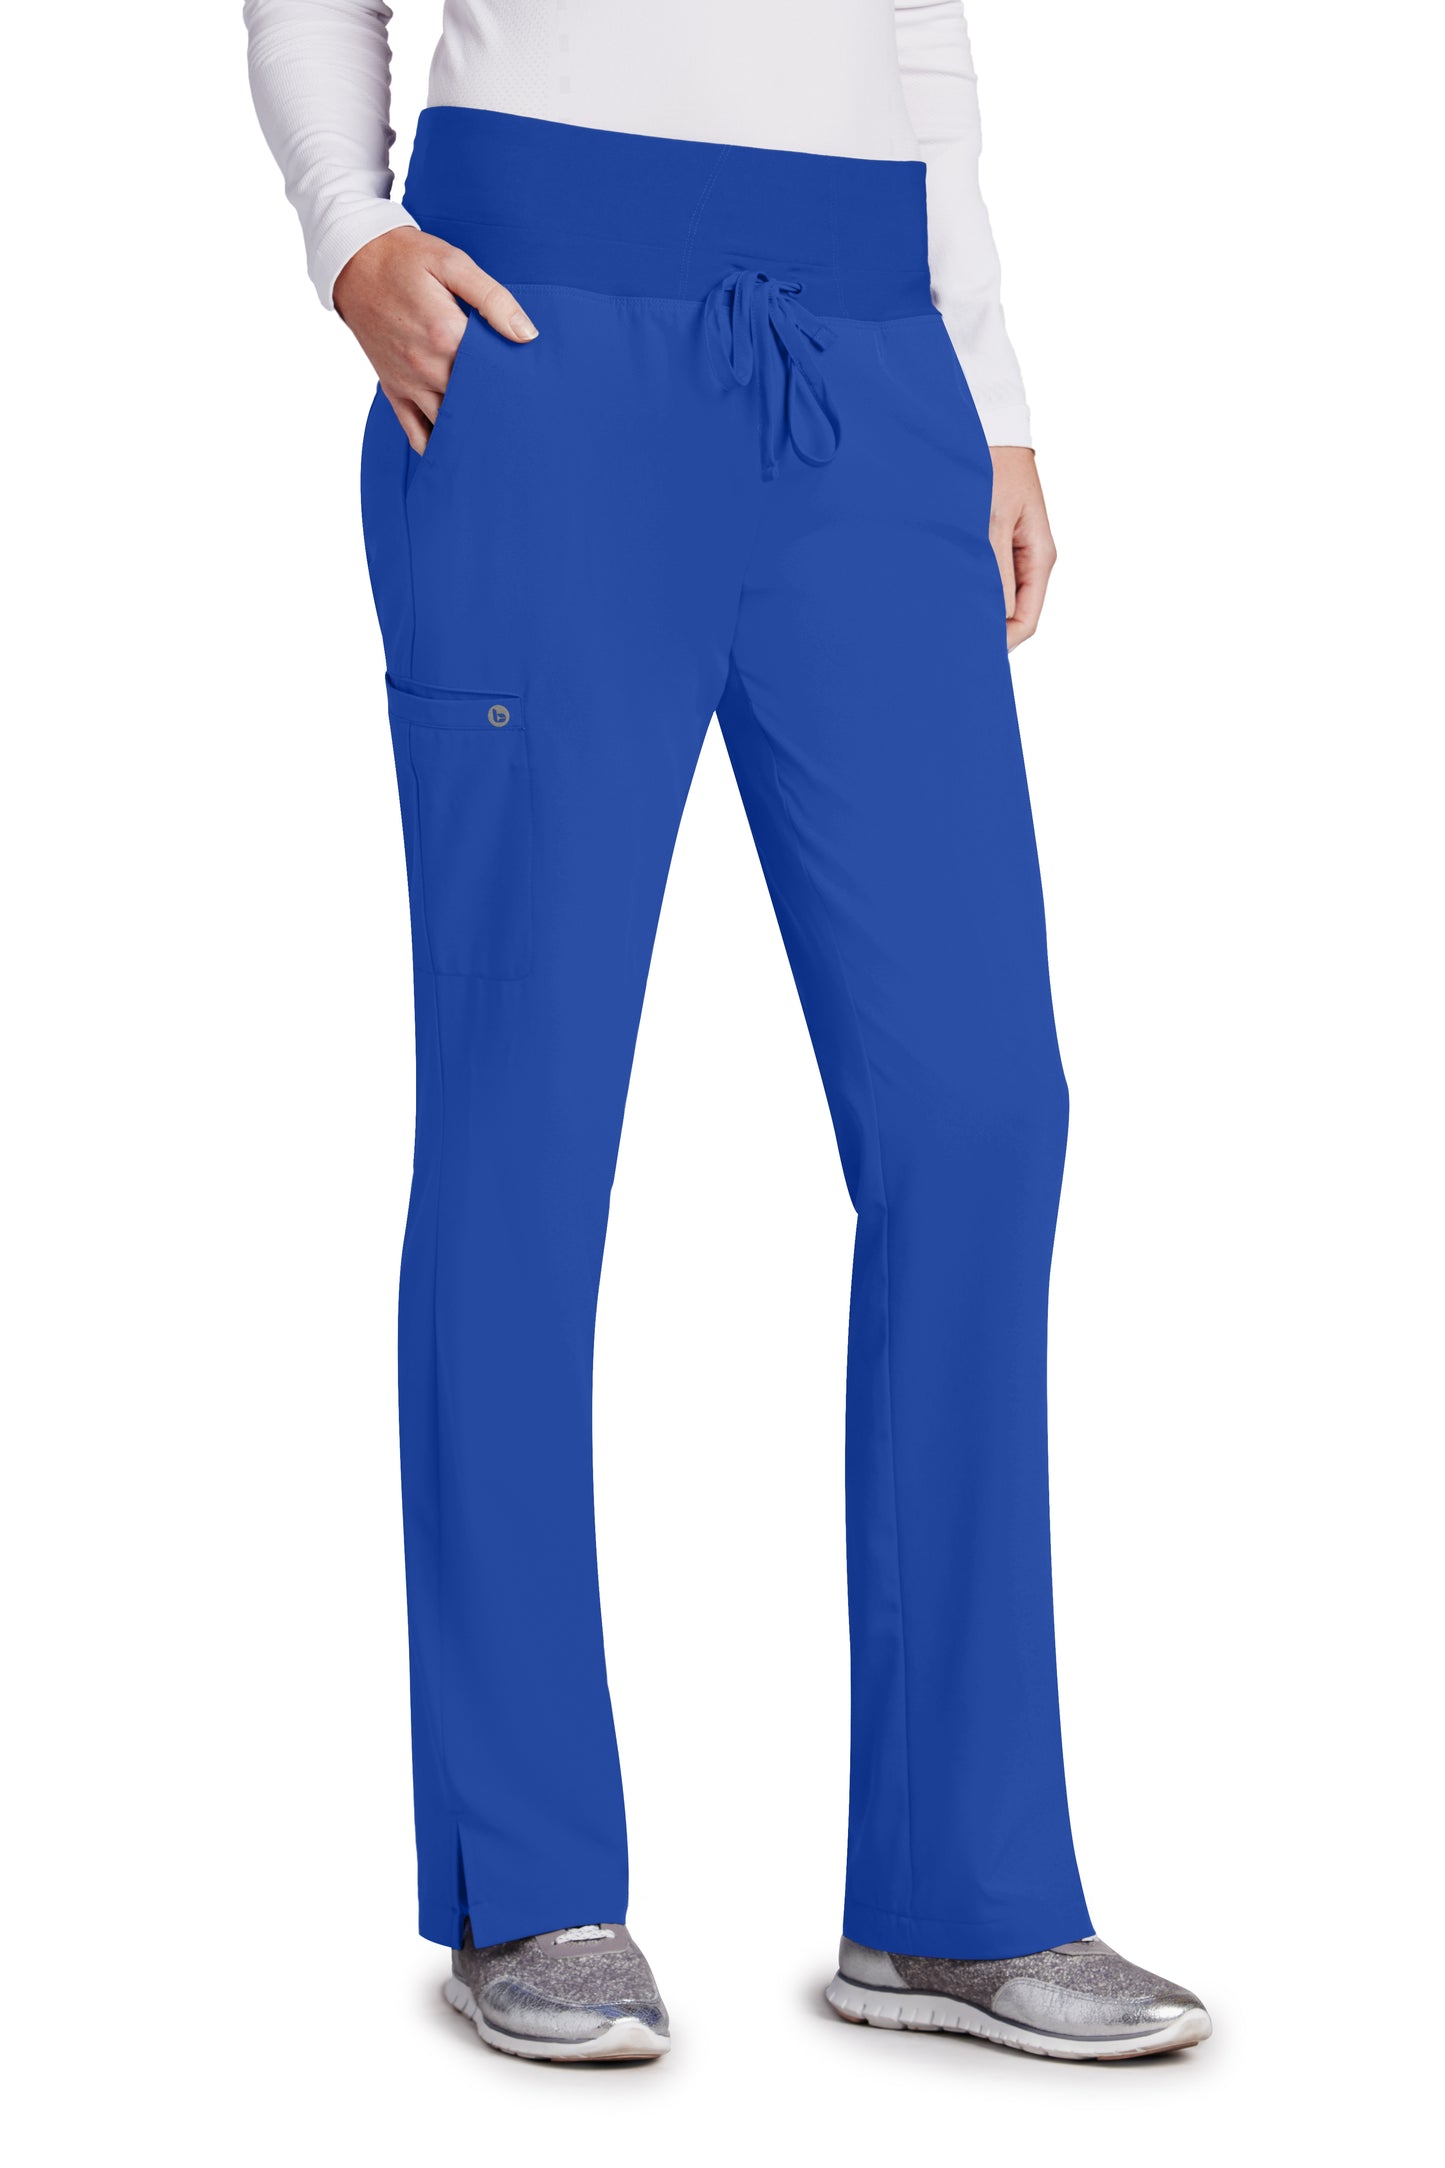 Barco One 5206 Women's Stride Yoga Straight Leg Cargo Pant - PETITE Royal Blue